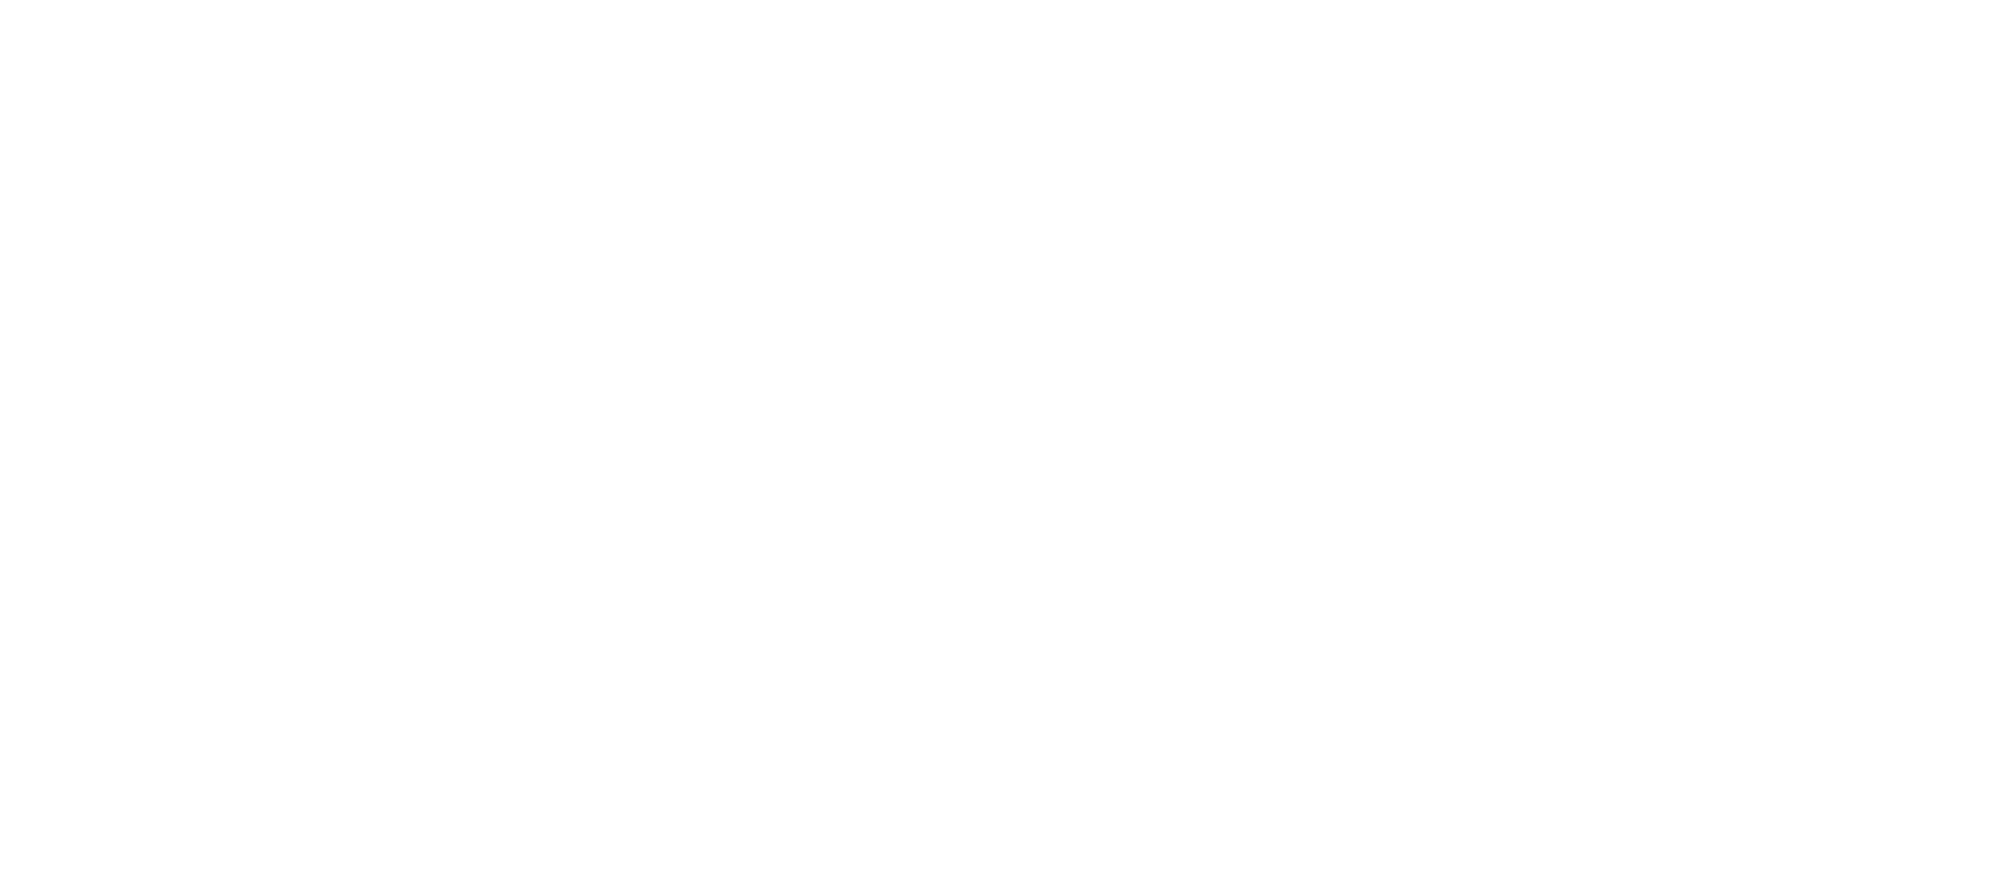 Star Trek V: The Final Frontier logo